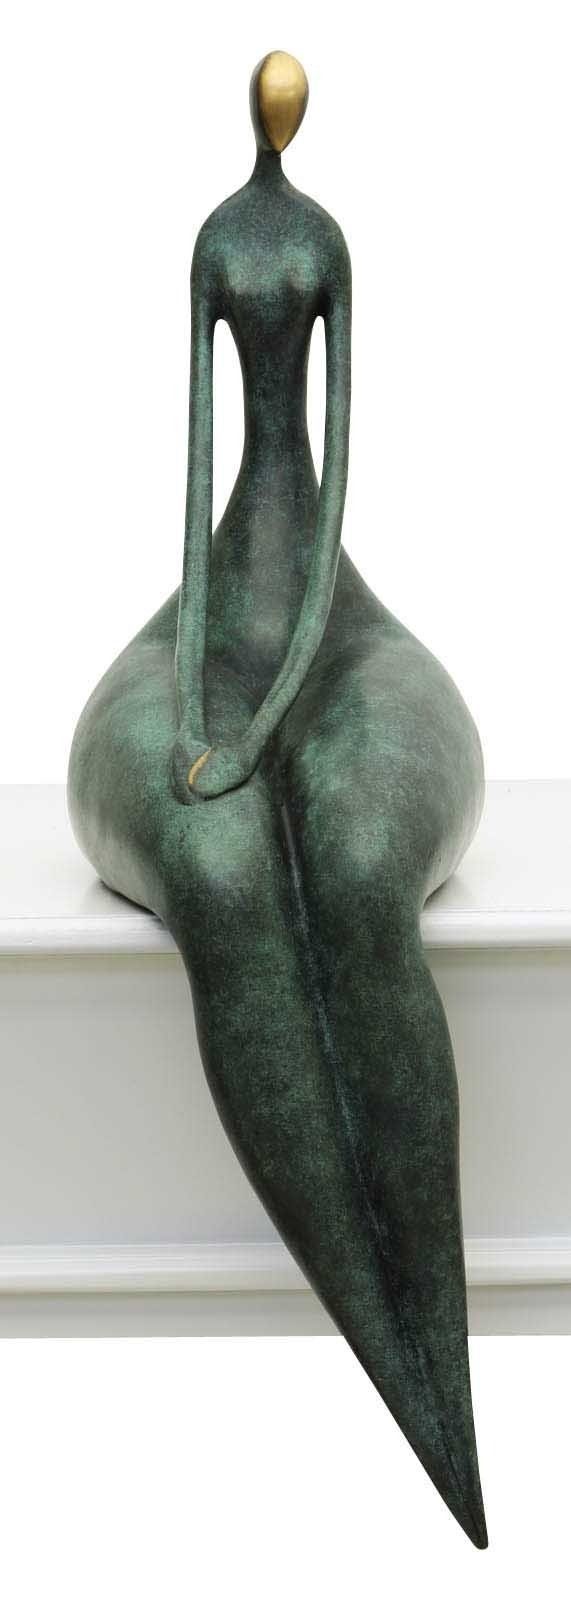 Antik-Stil Skulptur Bronzeskulptur Erotik - Bronze 44cm Figur Aubaho Akt Statue Frau